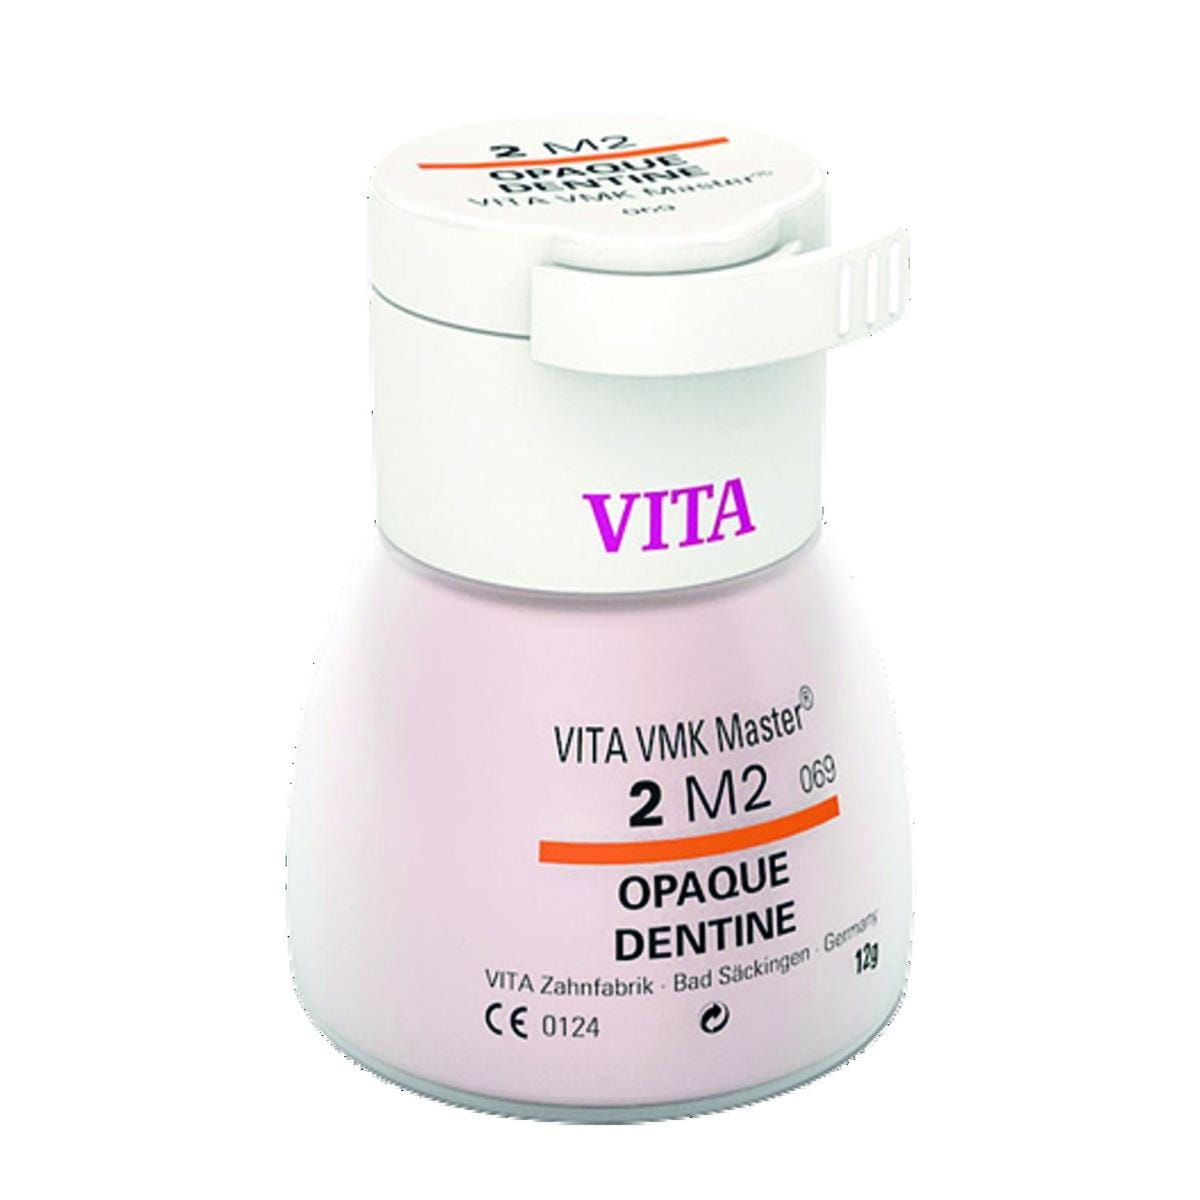 VMK Master VITA - Dentine Opaque - 0M1 - Le flacon de 12 g